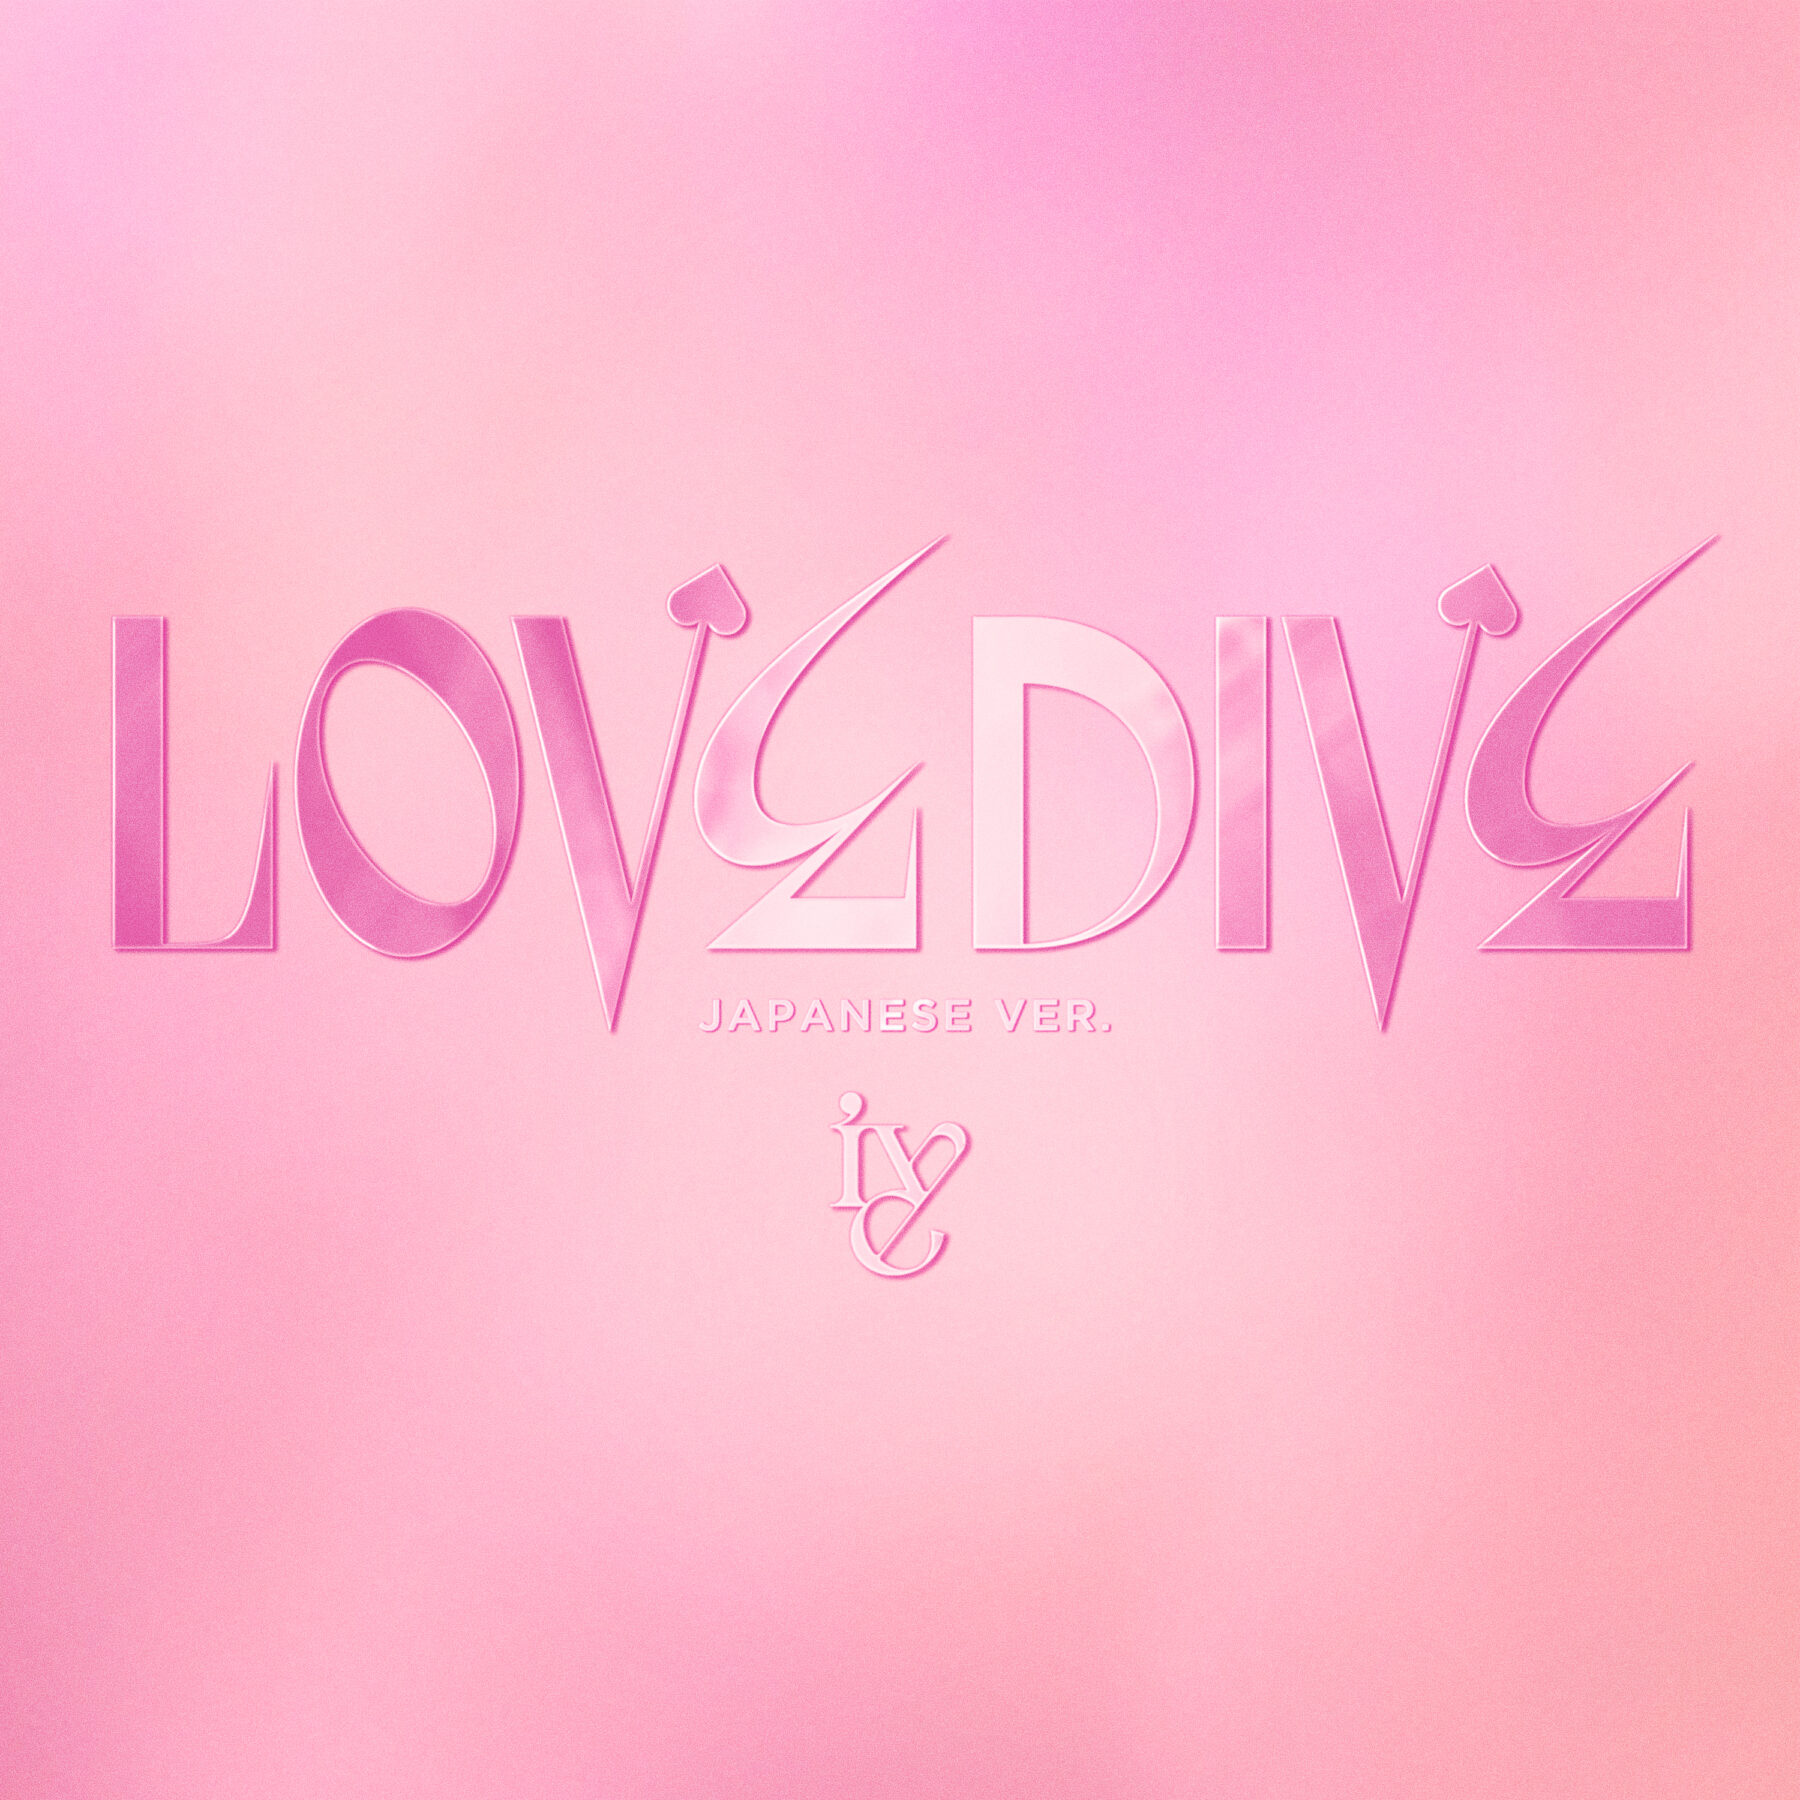 『LOVE DIVE -Japanese ver.-』ジャケット